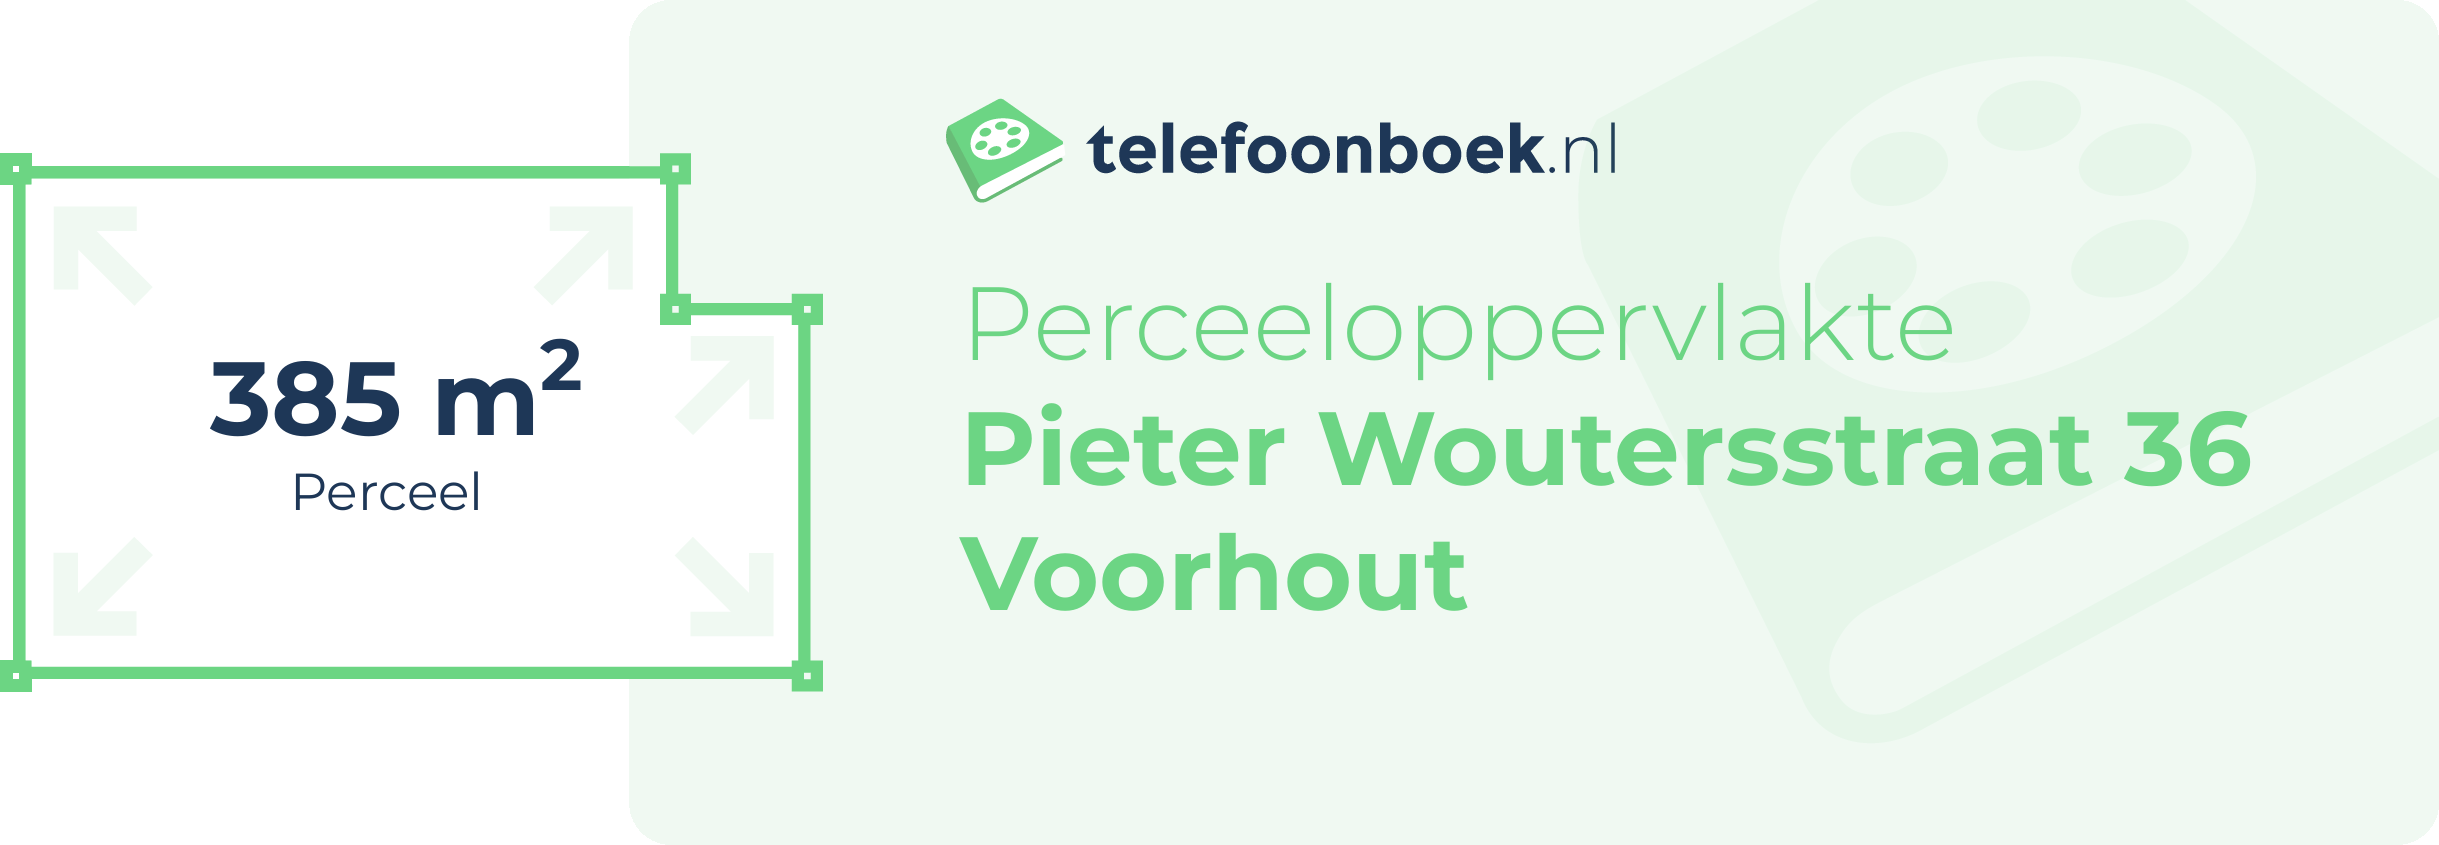 Perceeloppervlakte Pieter Woutersstraat 36 Voorhout